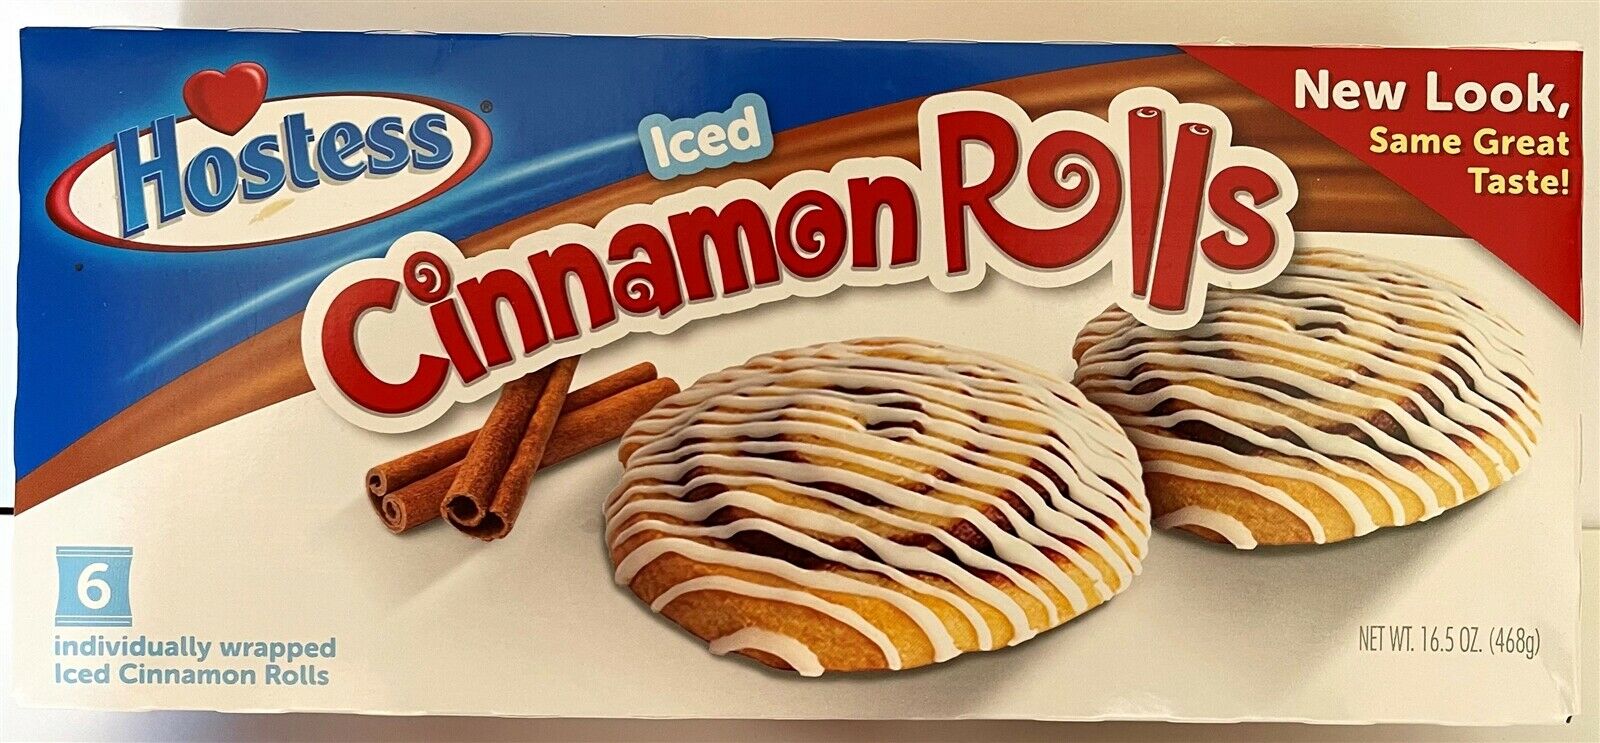 Hostess Iced Cinnamon Rolls - 2021 - 6 - 16.5 Oz (468g)- New Look Same Taste -